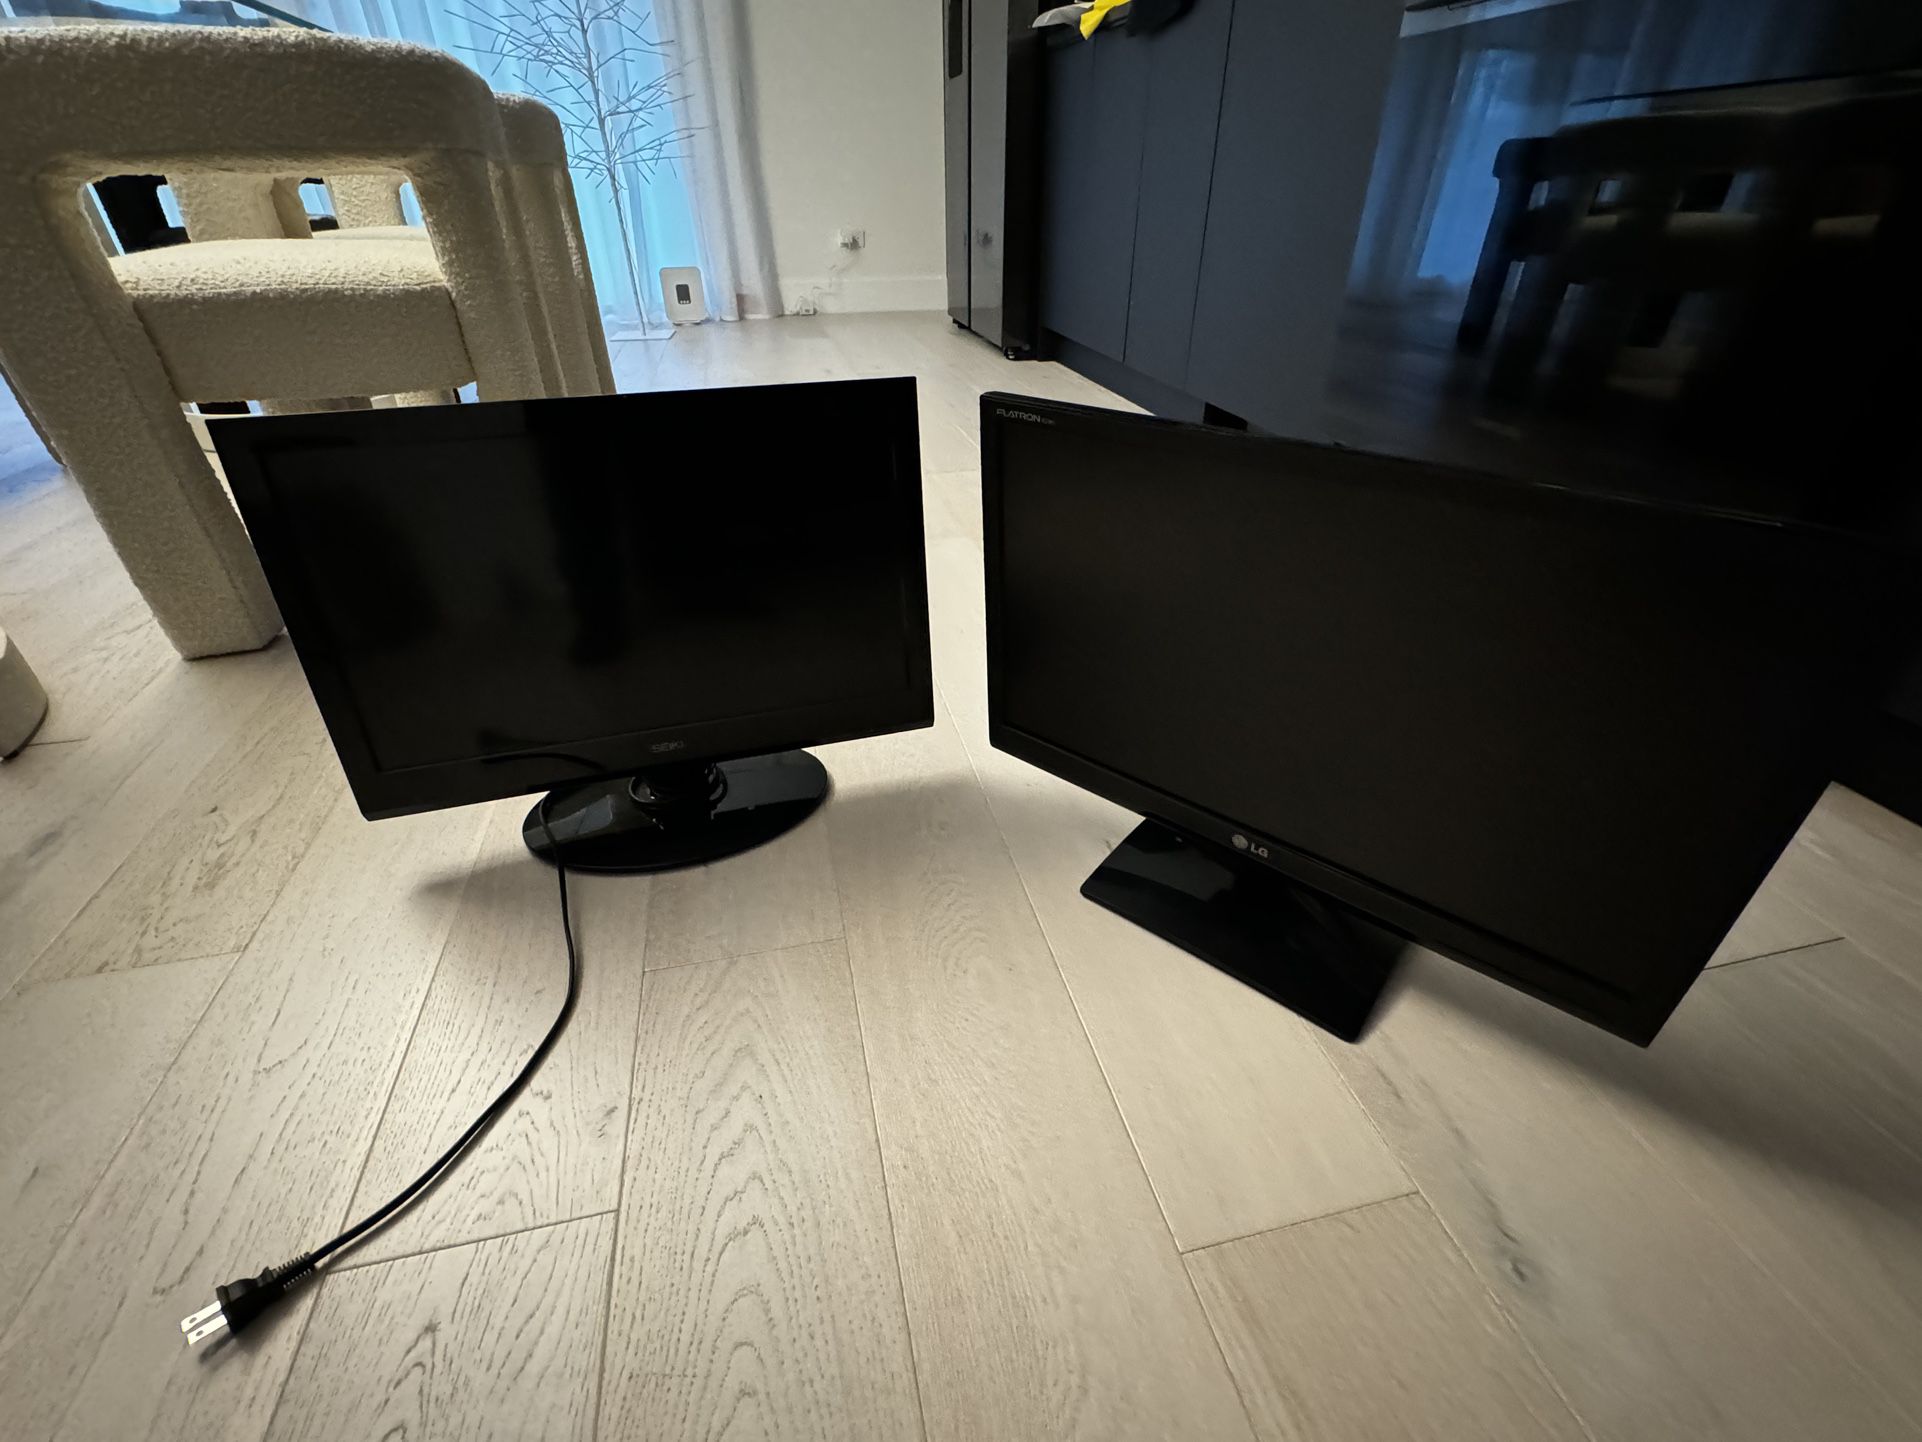 2 Monitors - LG And Seiki tv